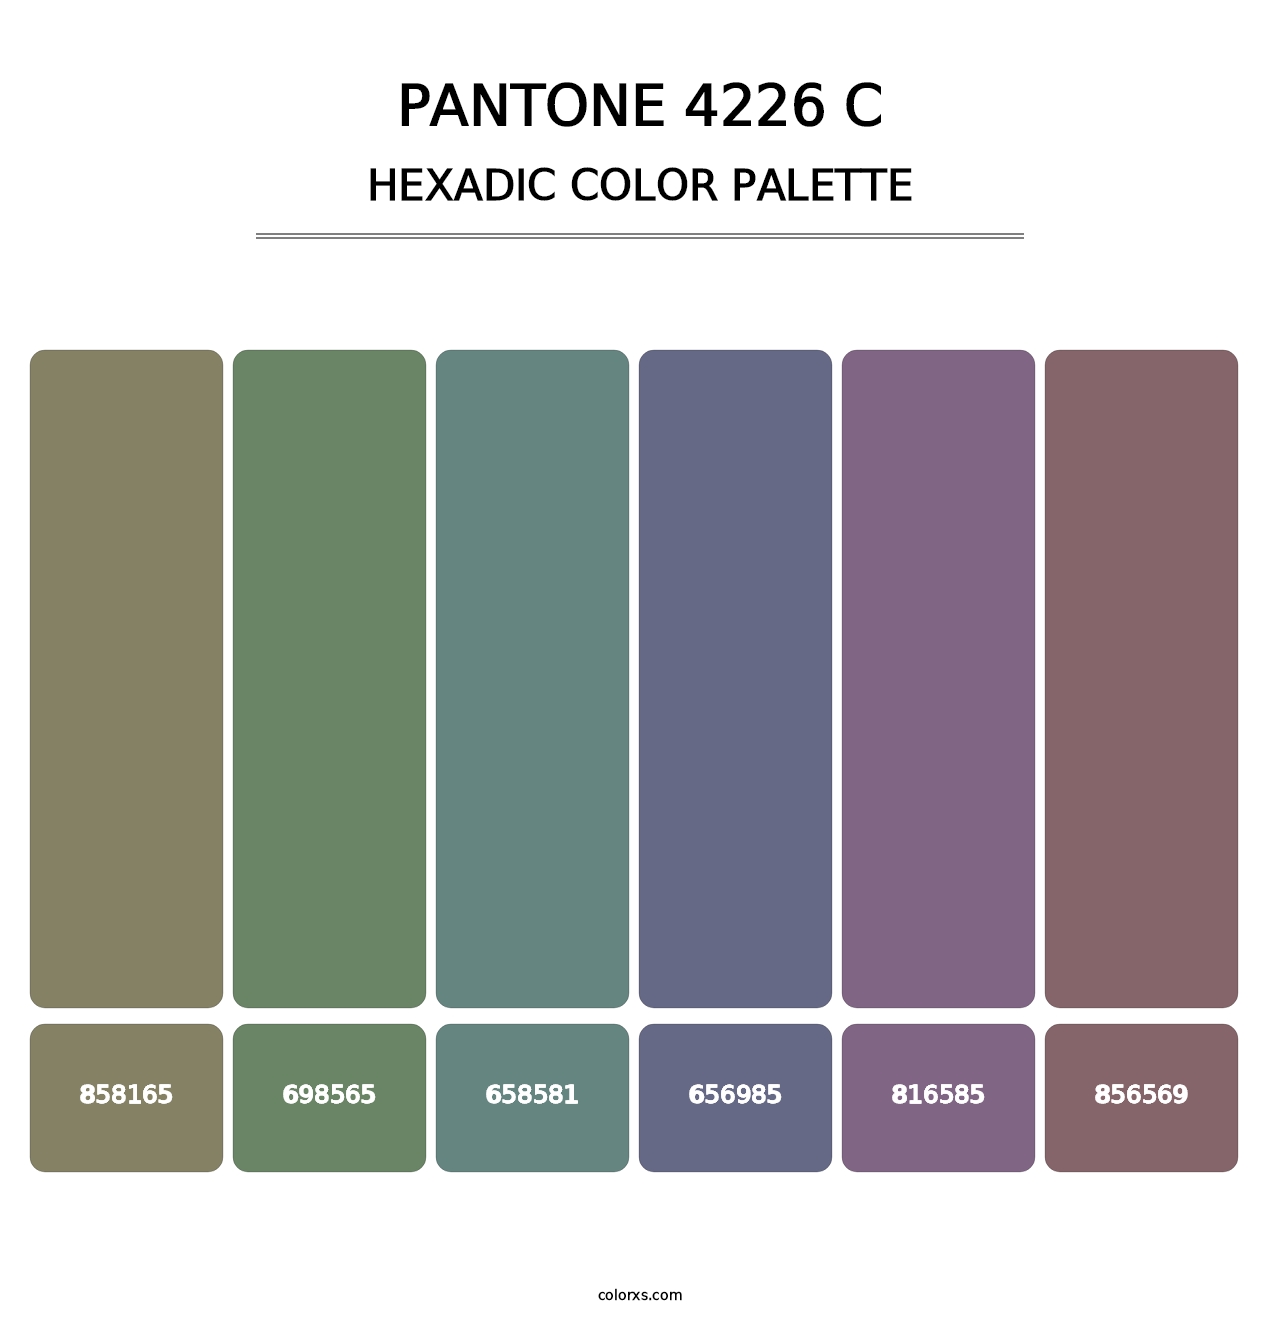 PANTONE 4226 C - Hexadic Color Palette